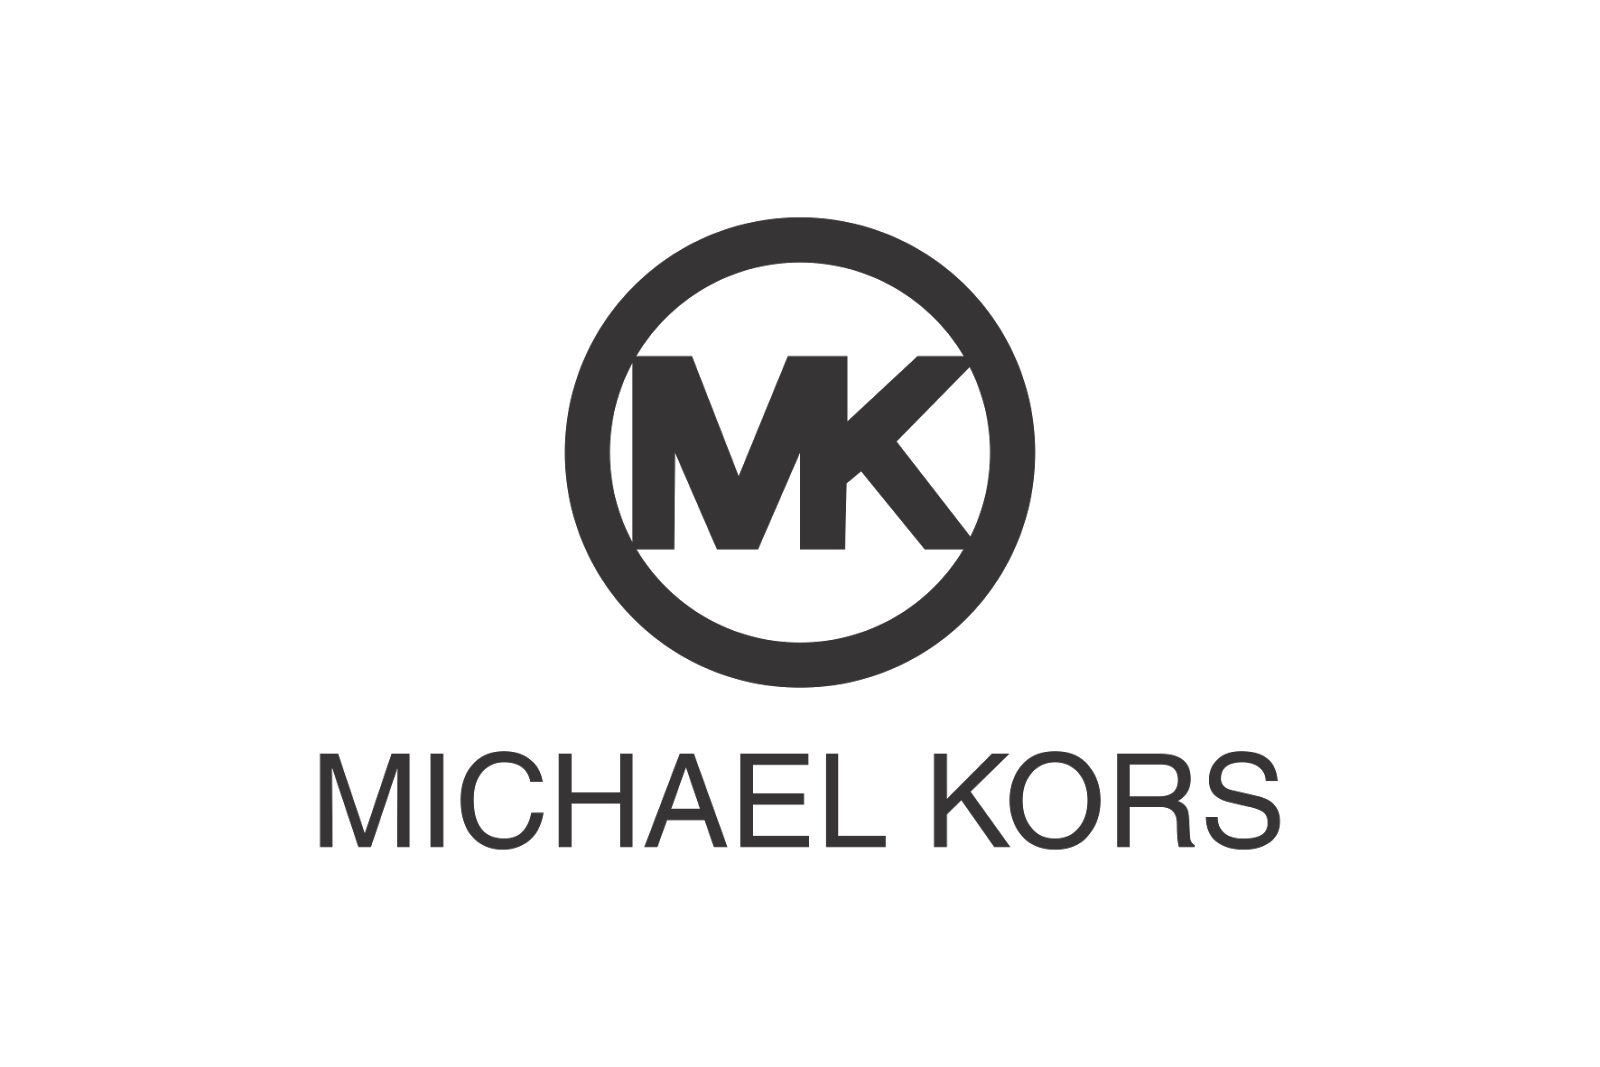 michael kors company history